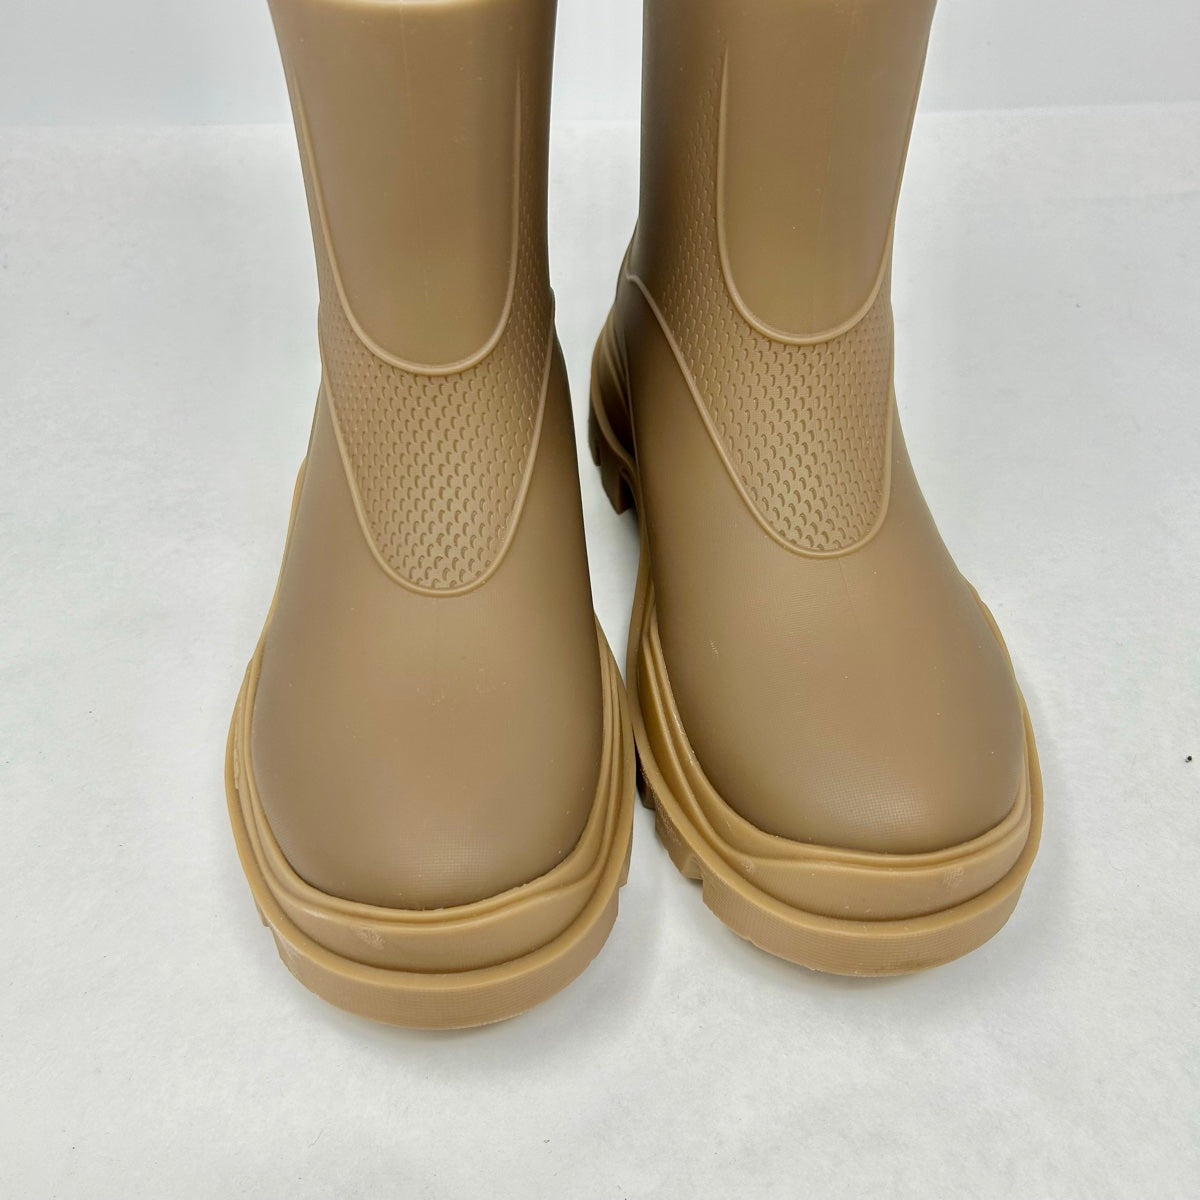 Moncler Boots